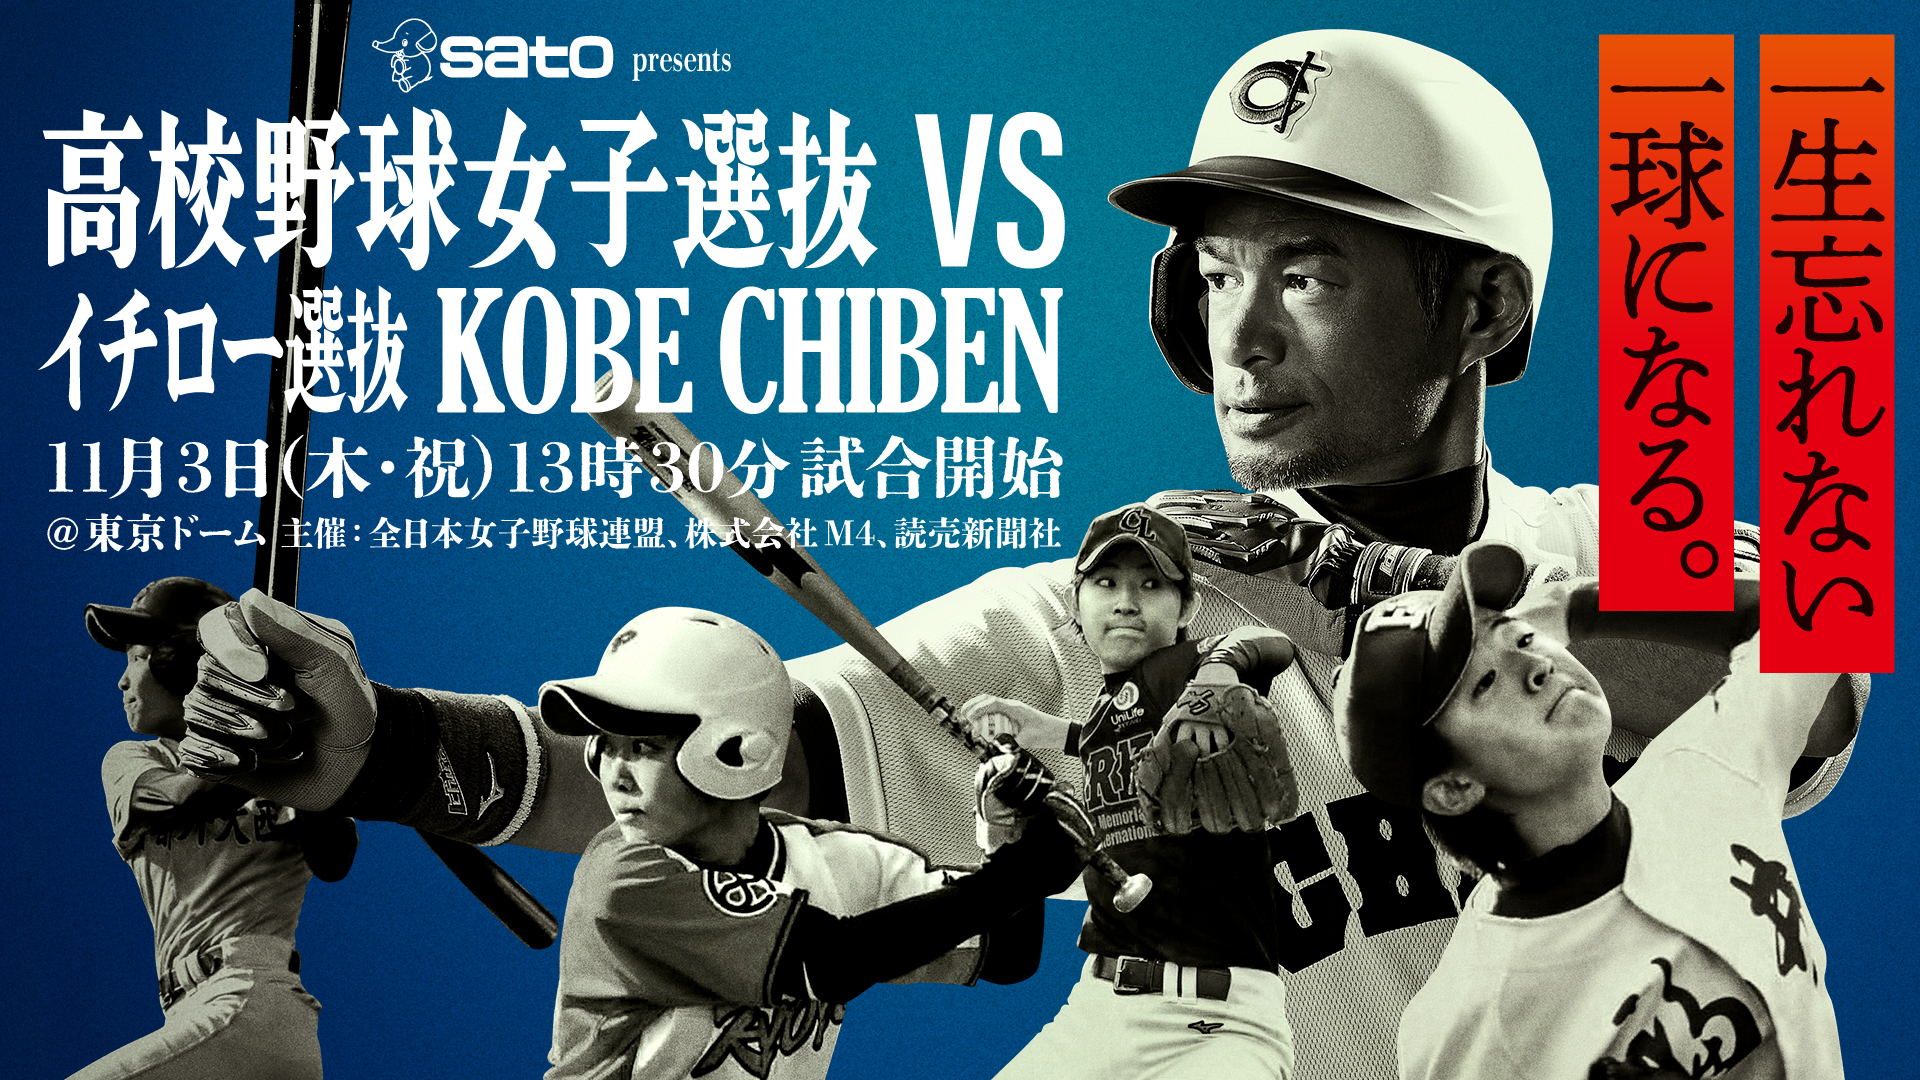 『SATO presents「高校野球女子選抜」vs「イチロー選抜KOBE CHIBEN」』に、習志野高校（千葉）と東海大学付属高輪台高校（東京）の吹奏楽部が応援で参加する